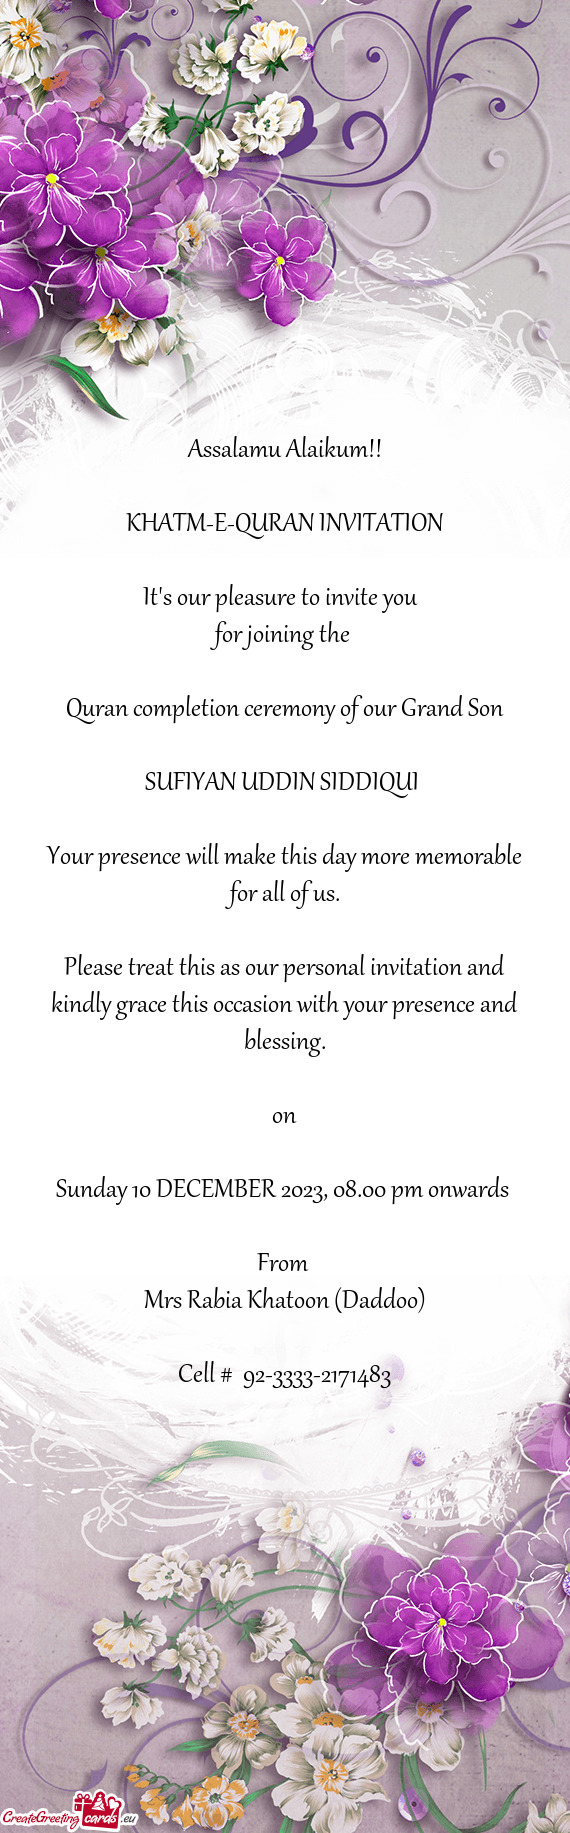 Sunday 10 DECEMBER 2023, 08.00 pm onwards